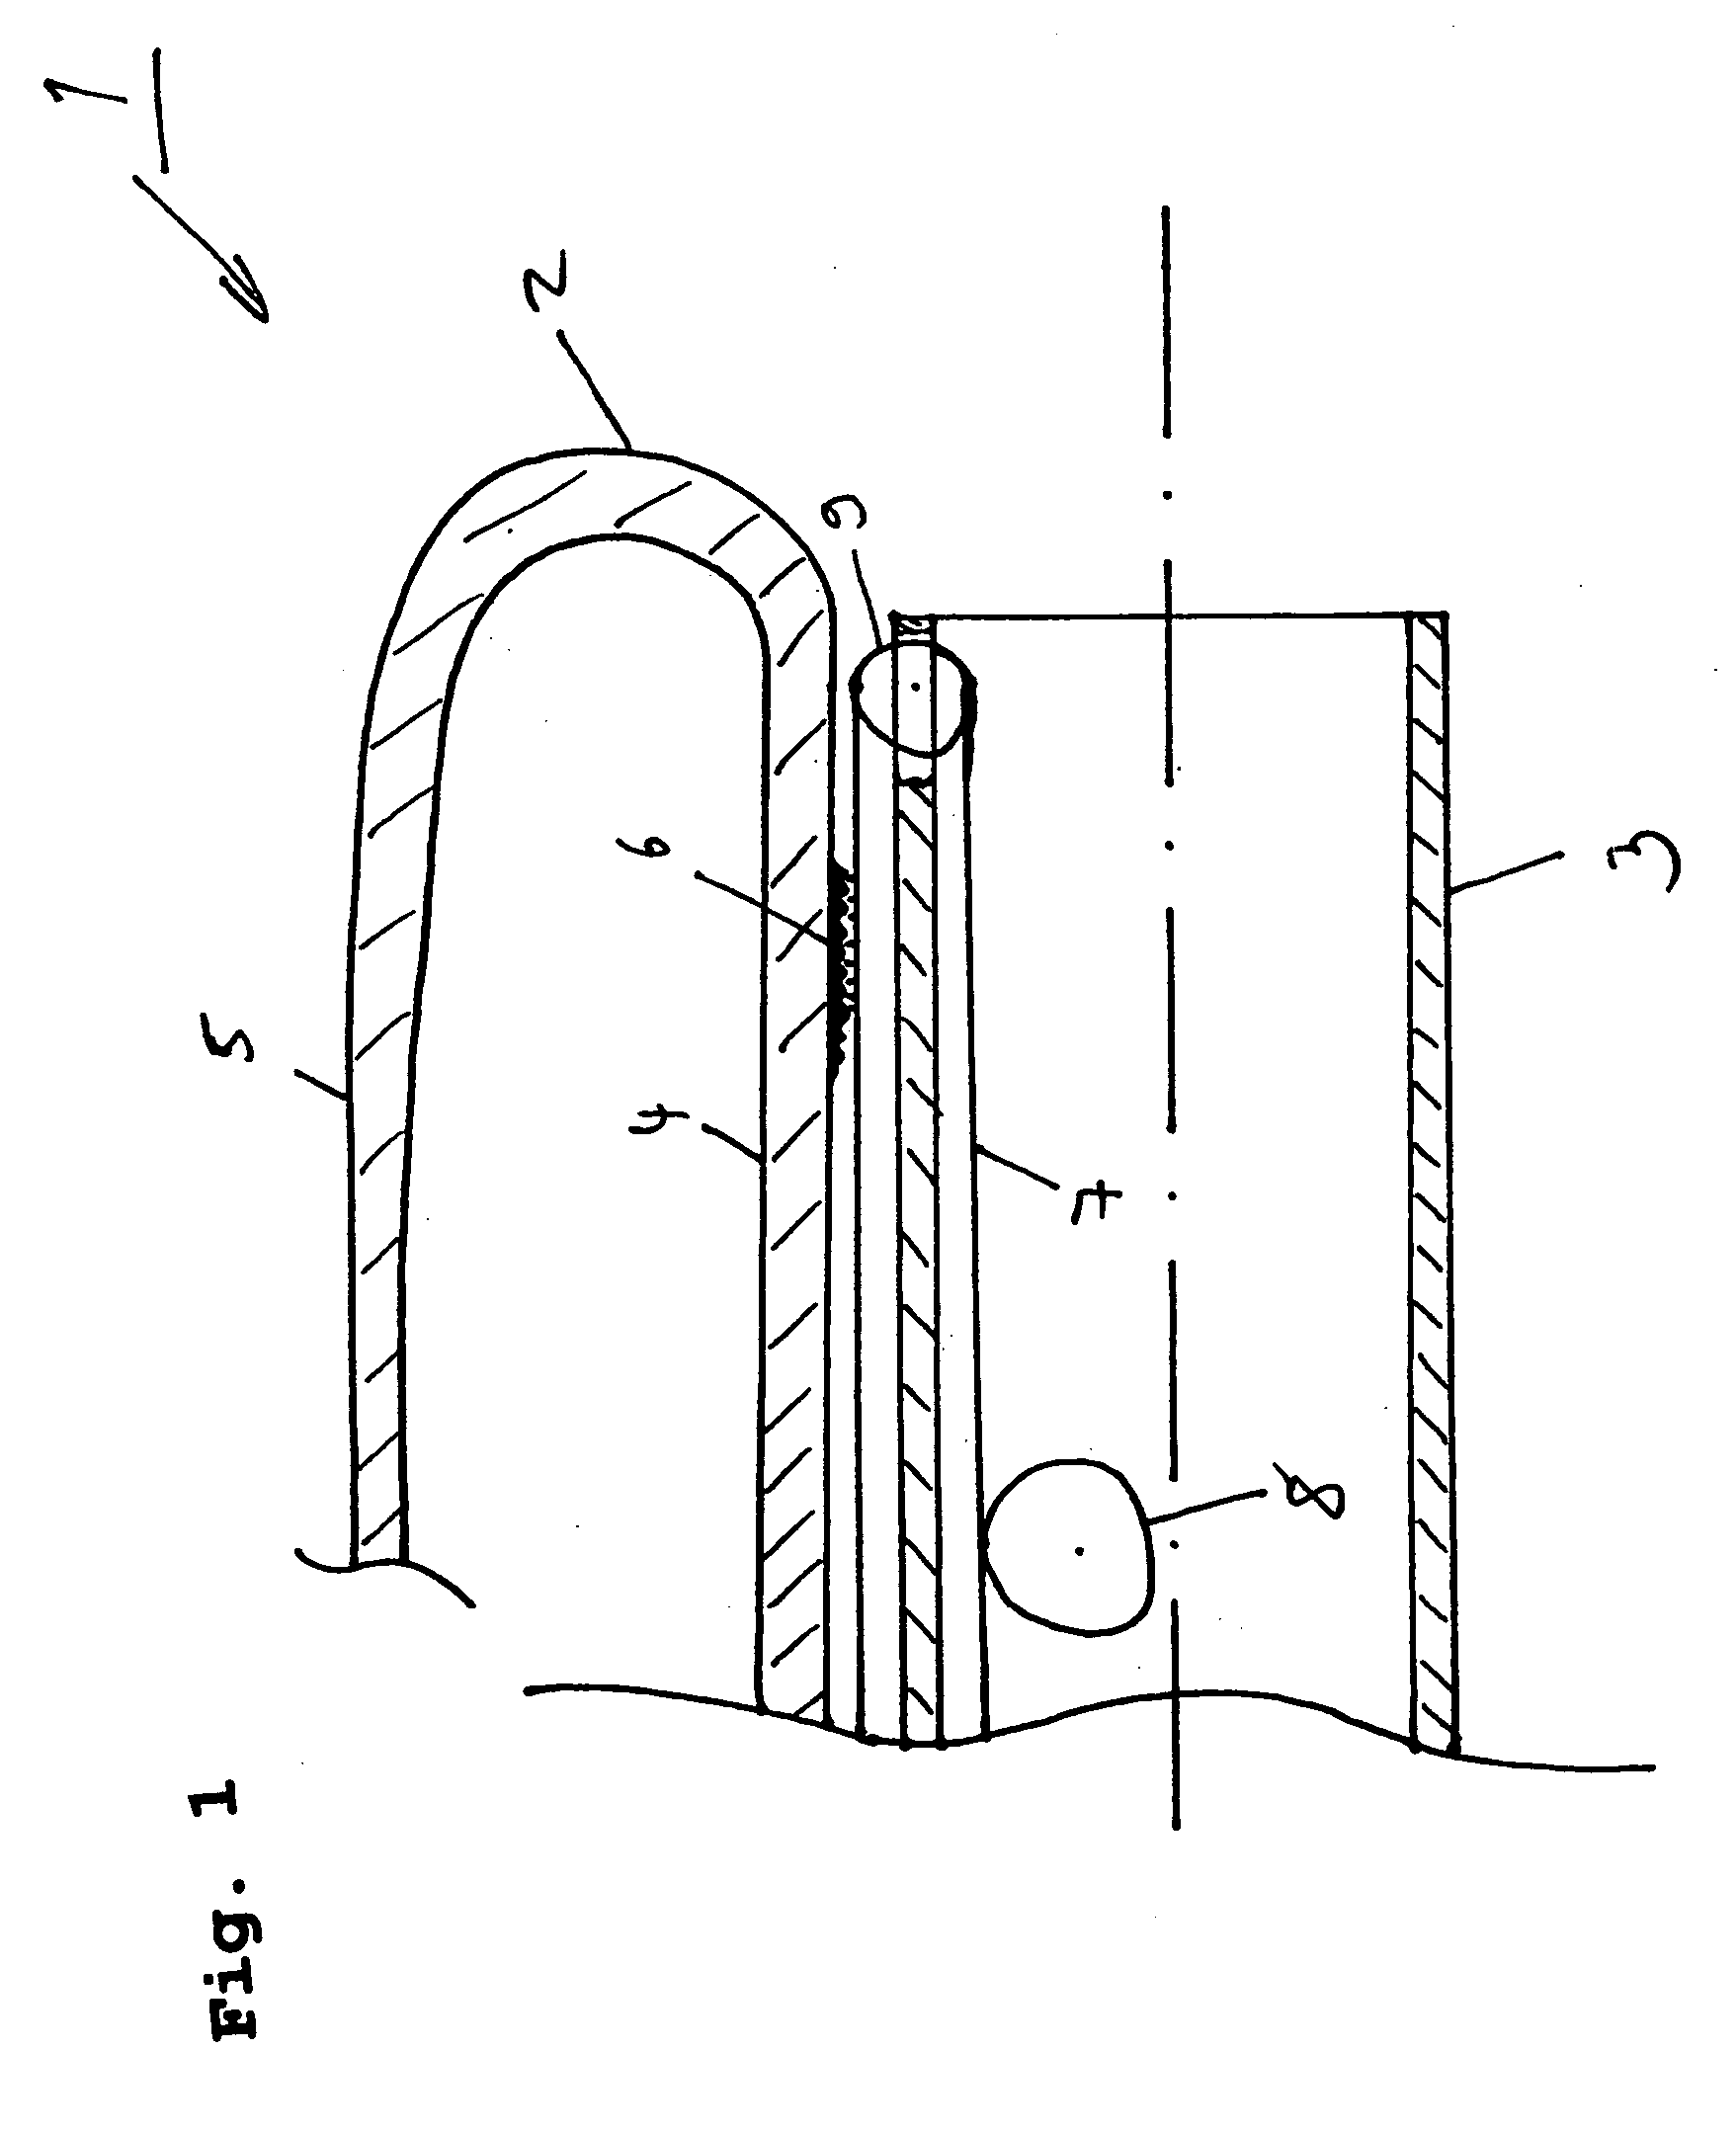 Endoscope comprising a longitudinally guided everting tube